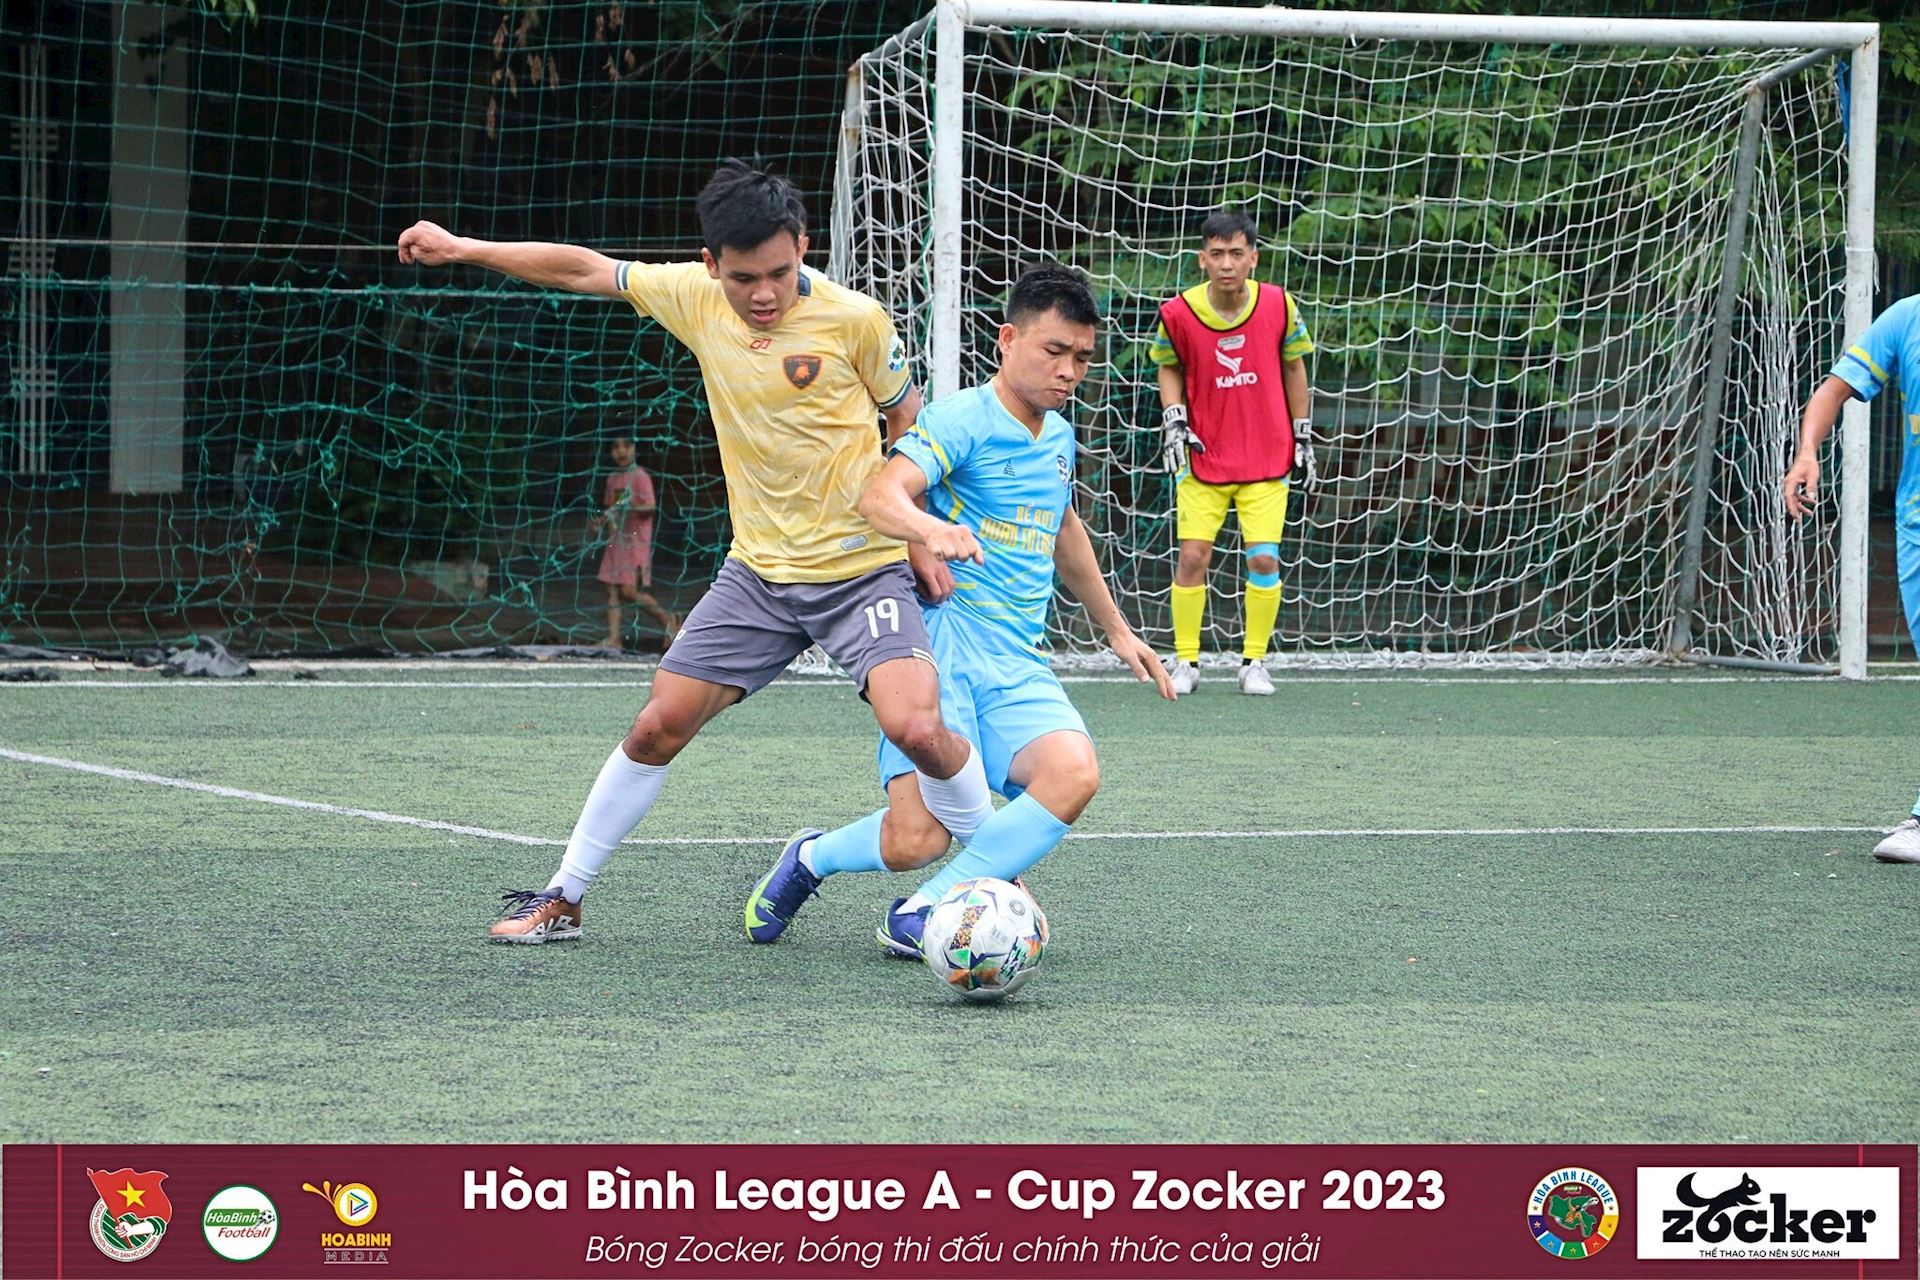 bong-zocker-Hoa-Bình-League-ZOCKER-CUP-2023-6